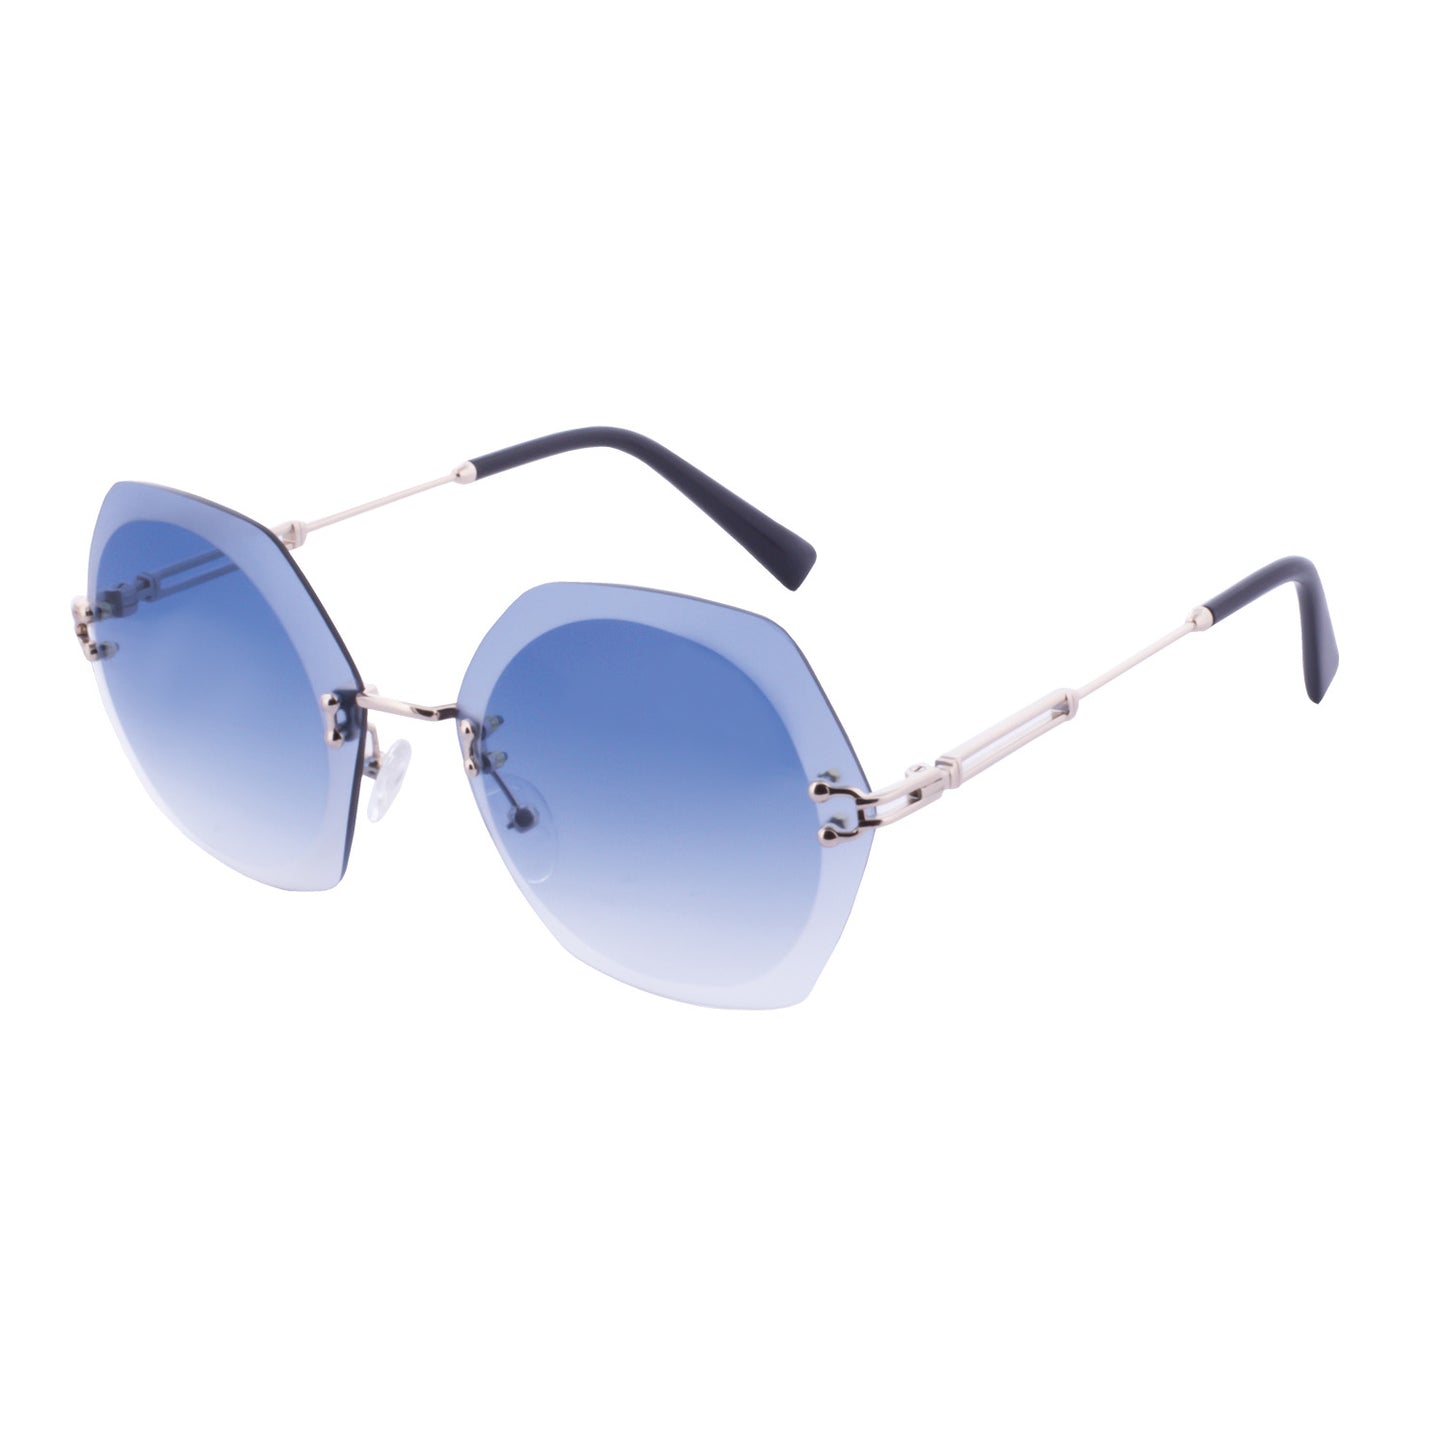 Mokki 90s Posh sunglasses in blue